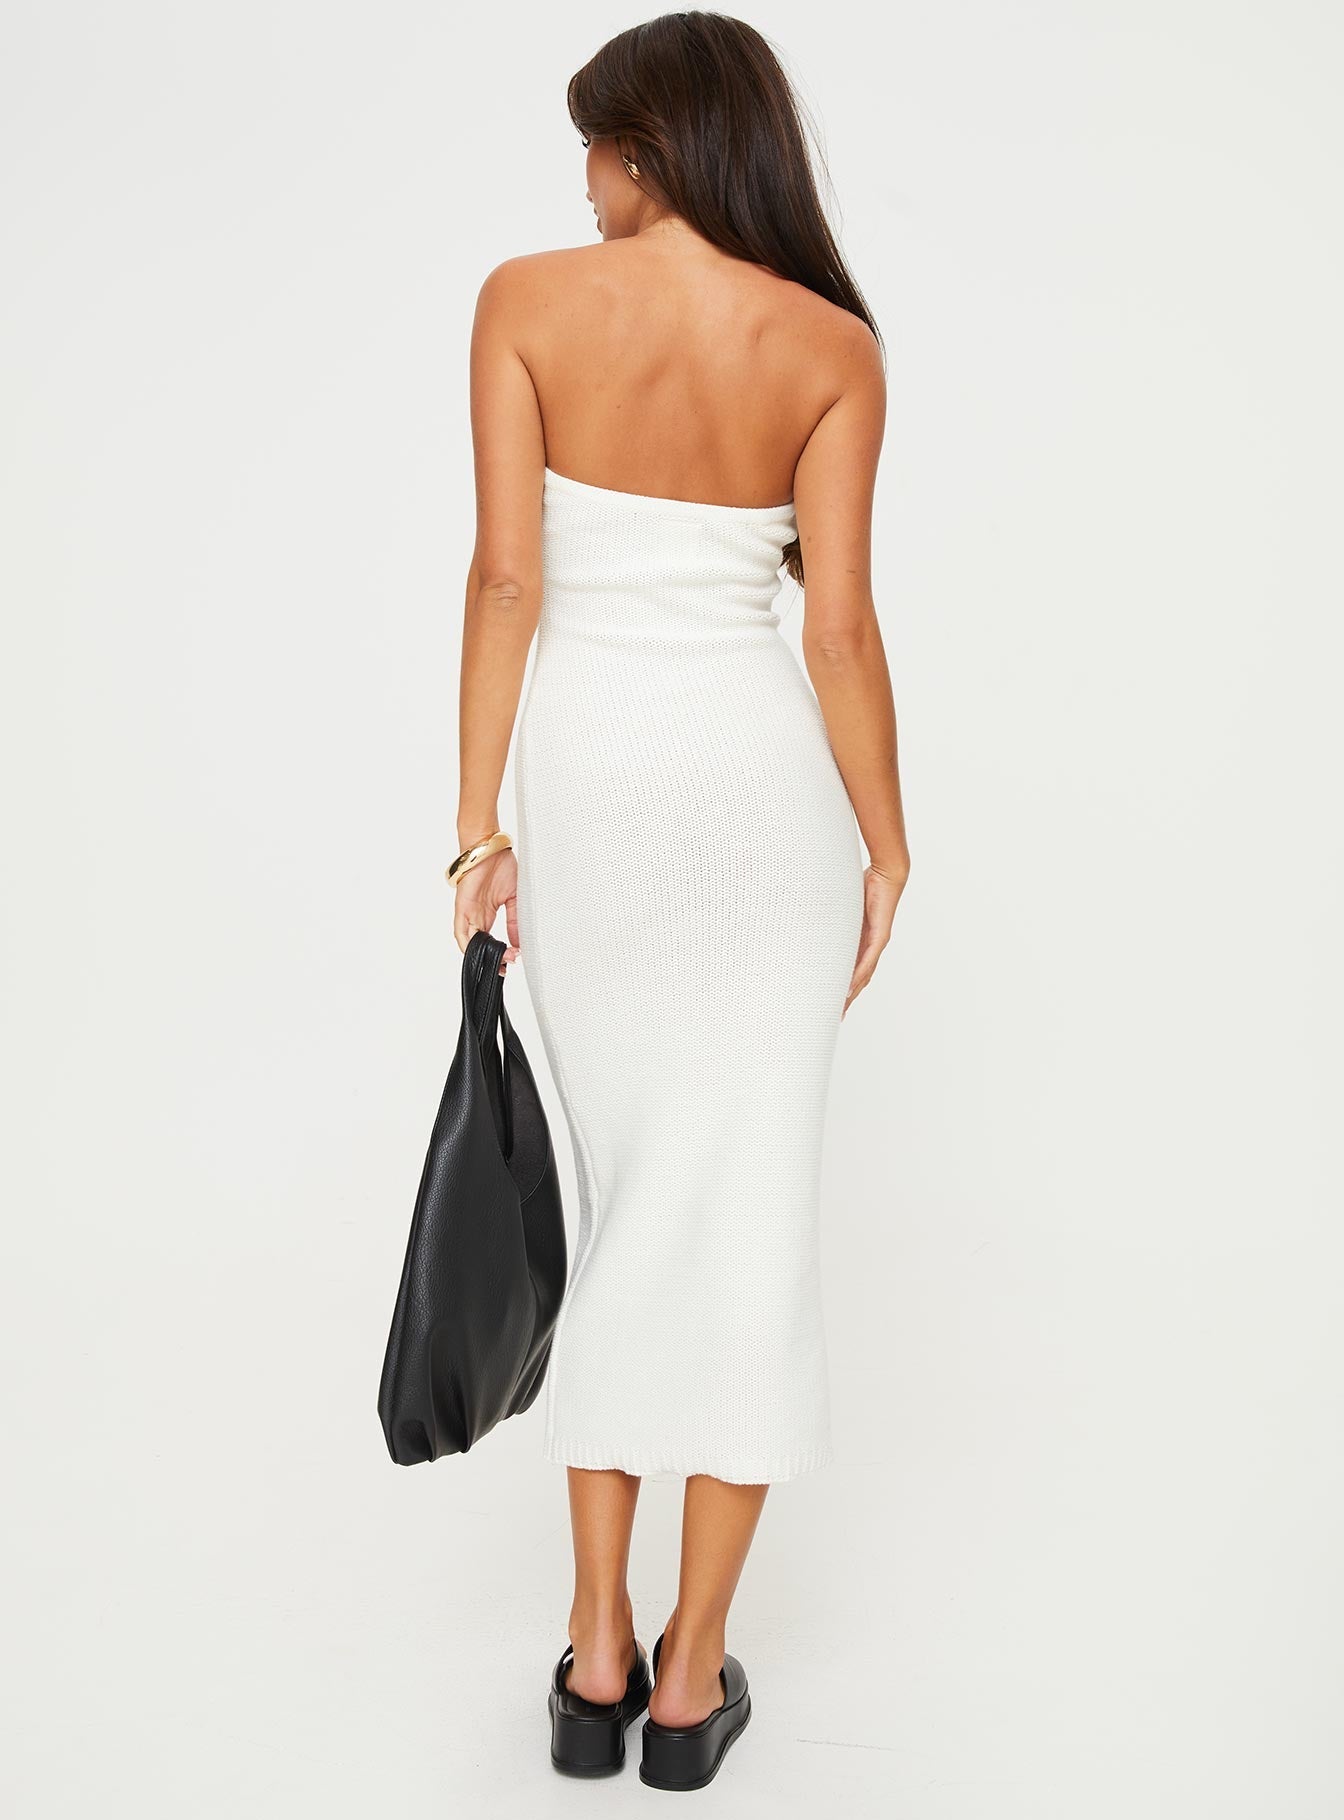 Shop Formal Dress White Dress Maxi Strapless Flow